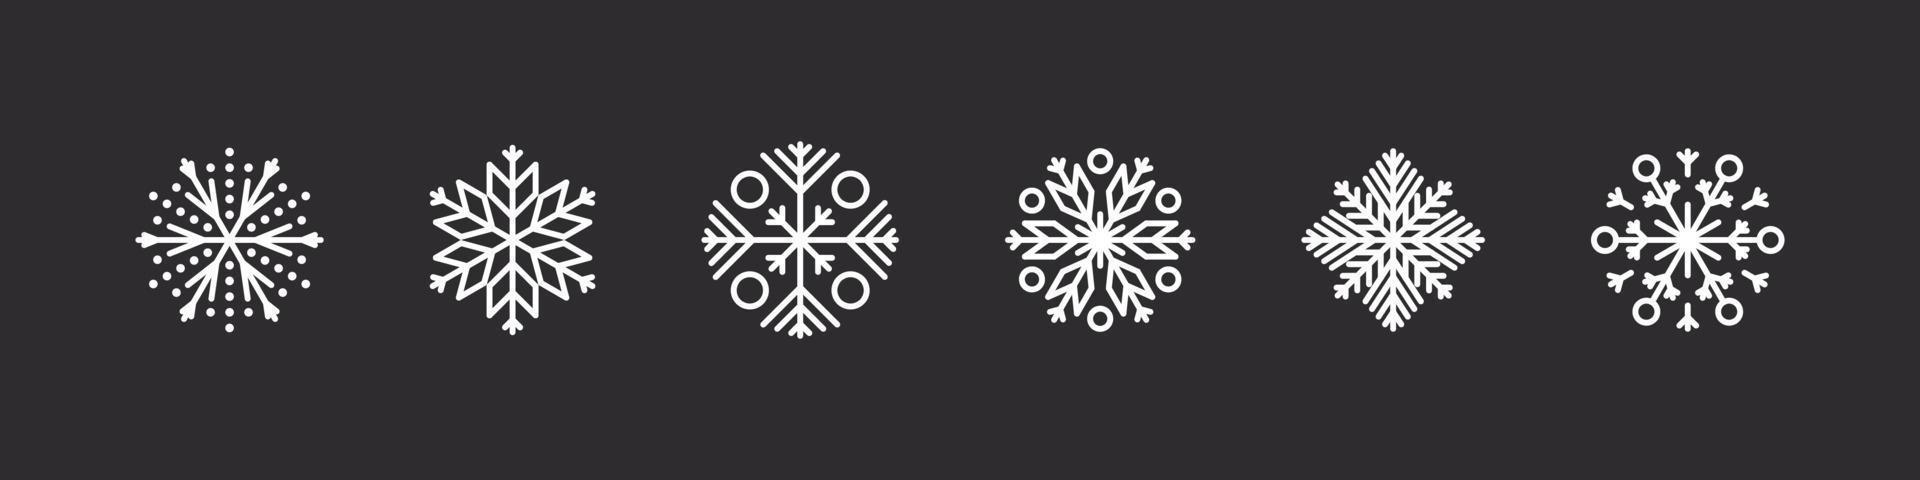 Snowflakes icon set. White snowflakes on a dark background. Xmas signs. Beautiful snowflakes signs. Vector illustration